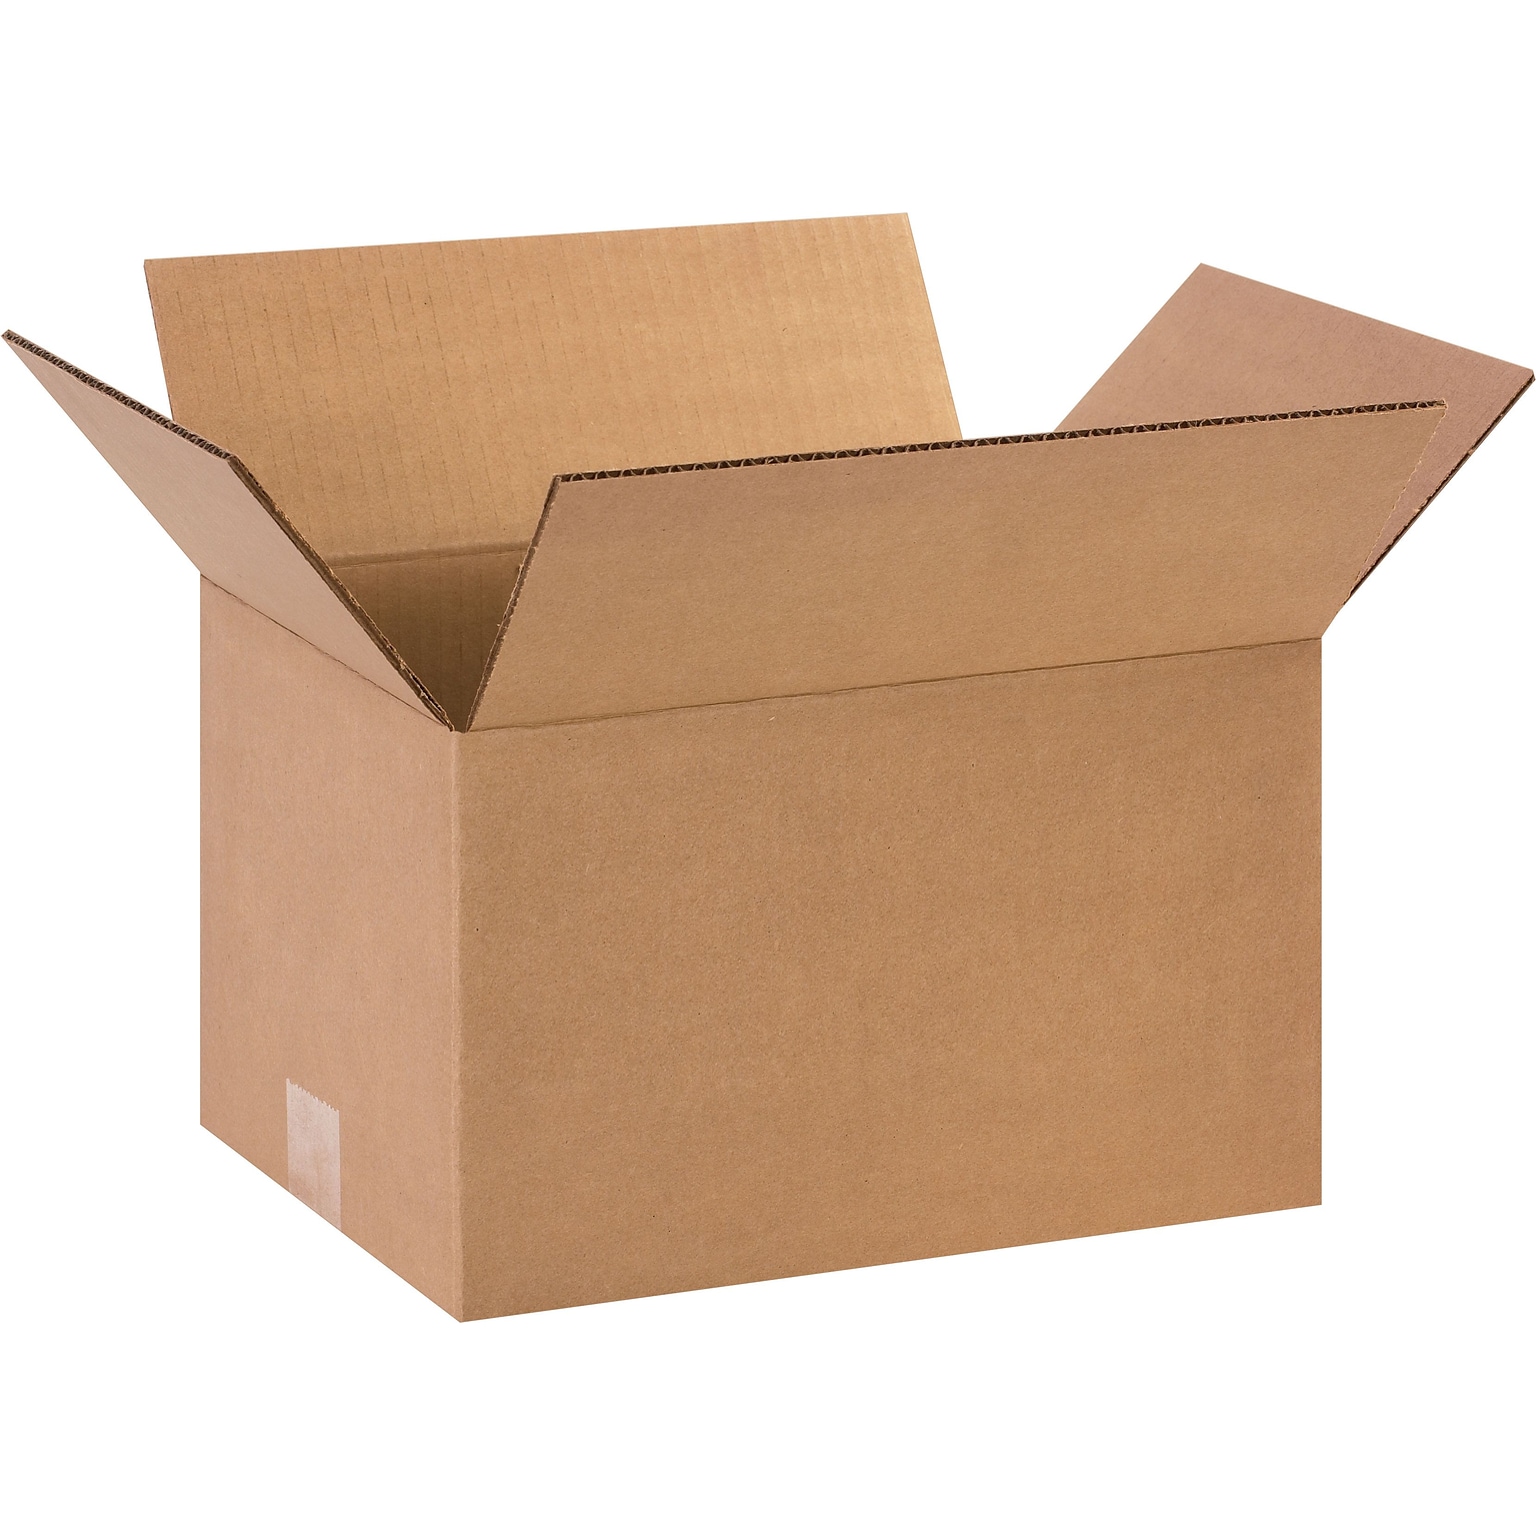 12 x 9 x 7 Shipping Boxes, 32 ECT, Brown, 25/Bundle (1297)